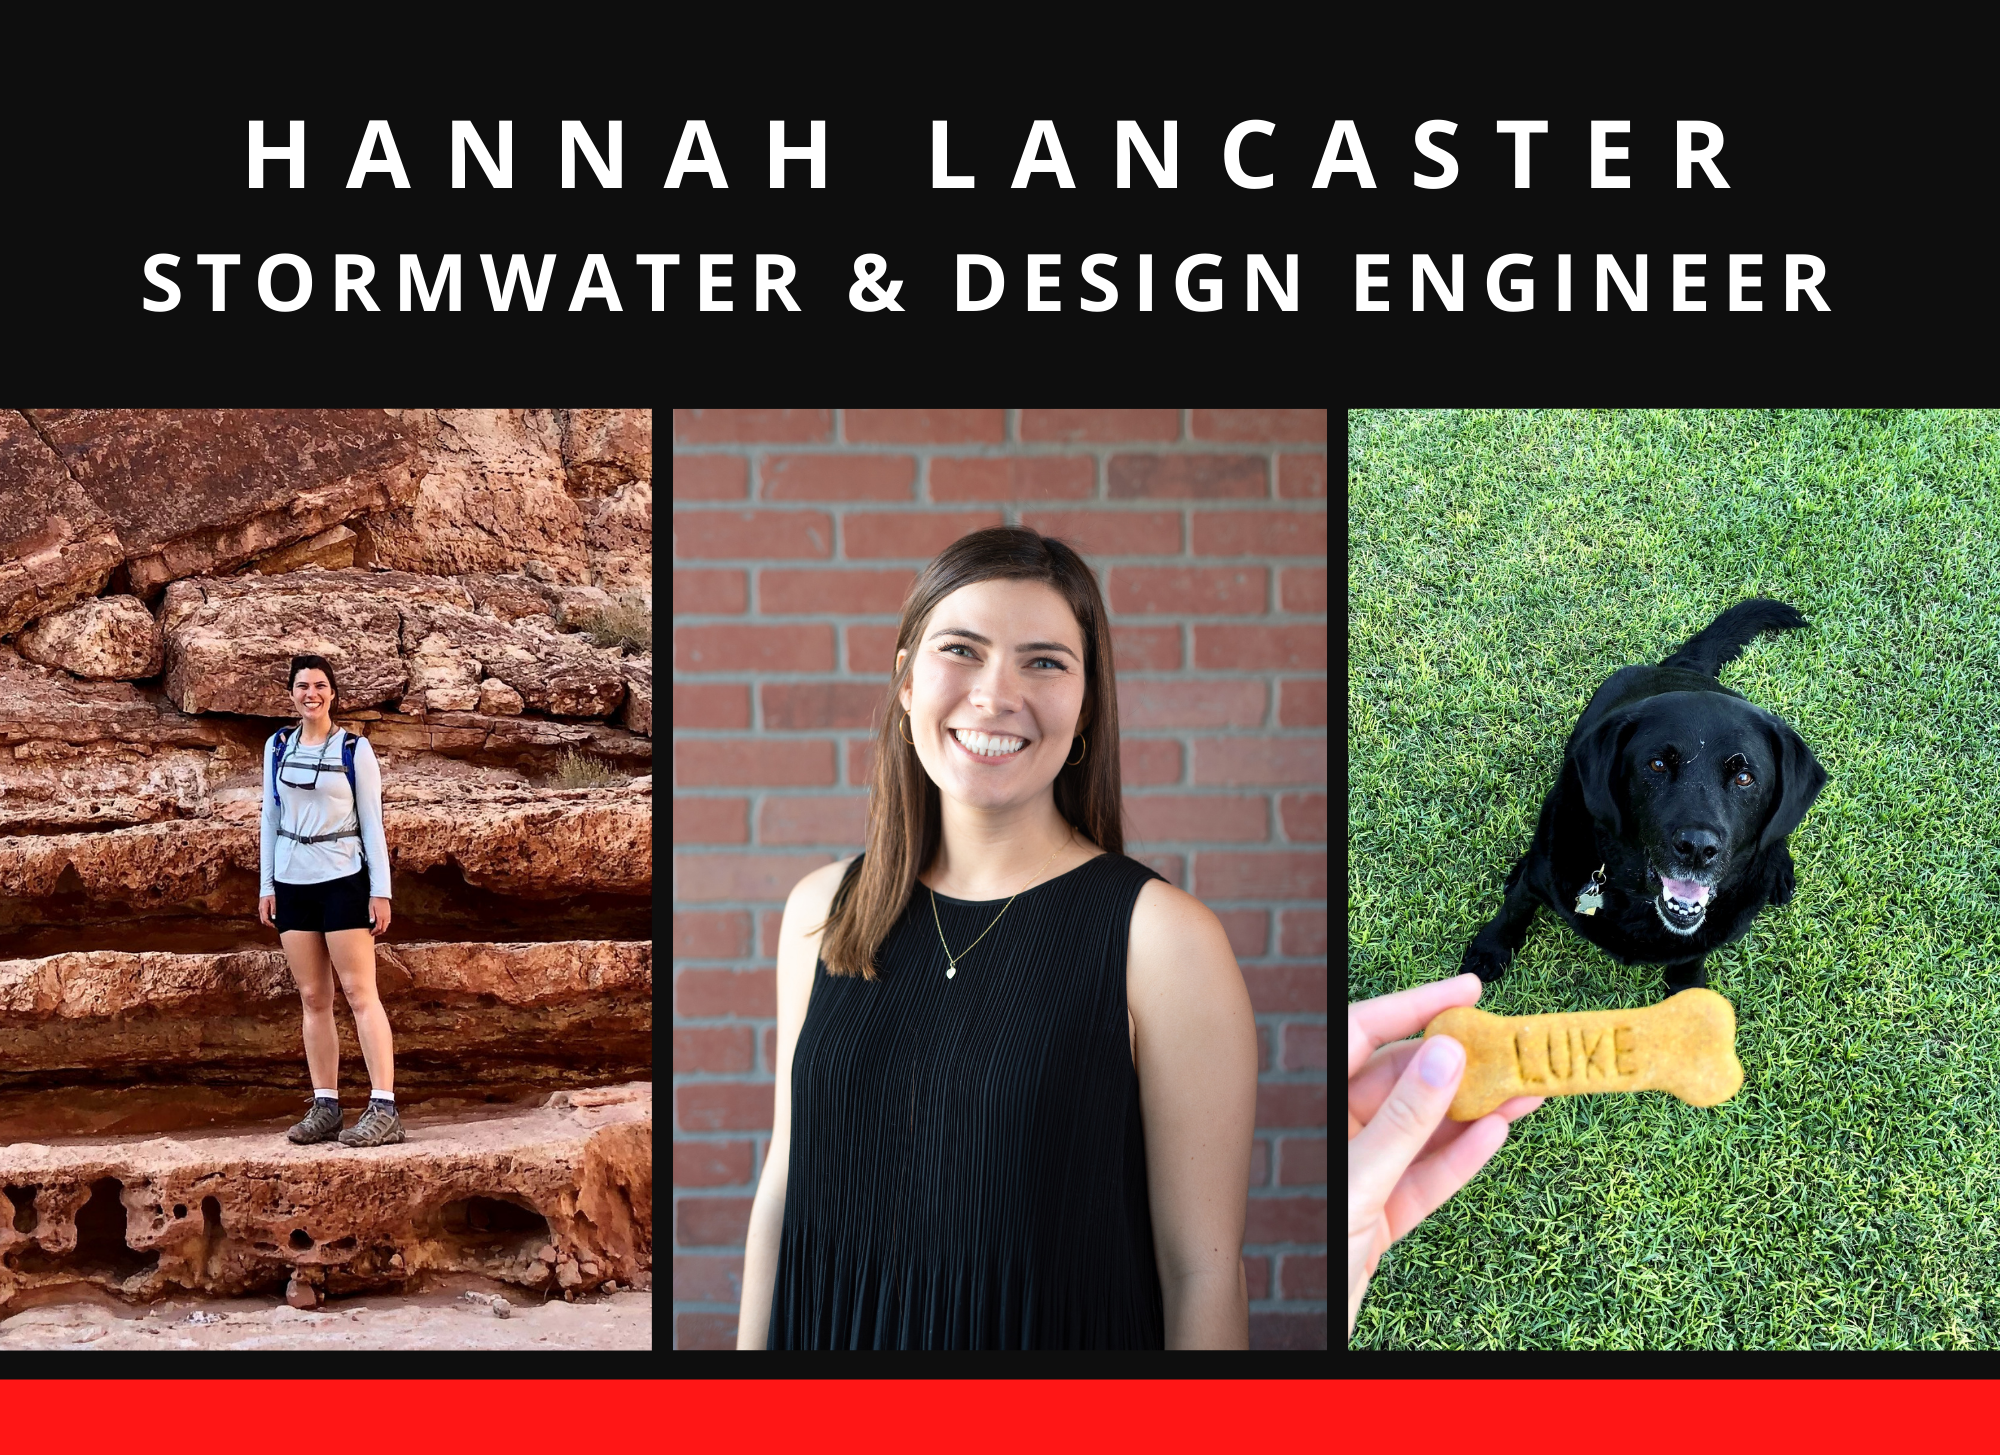 Meet Hannah Lancaster